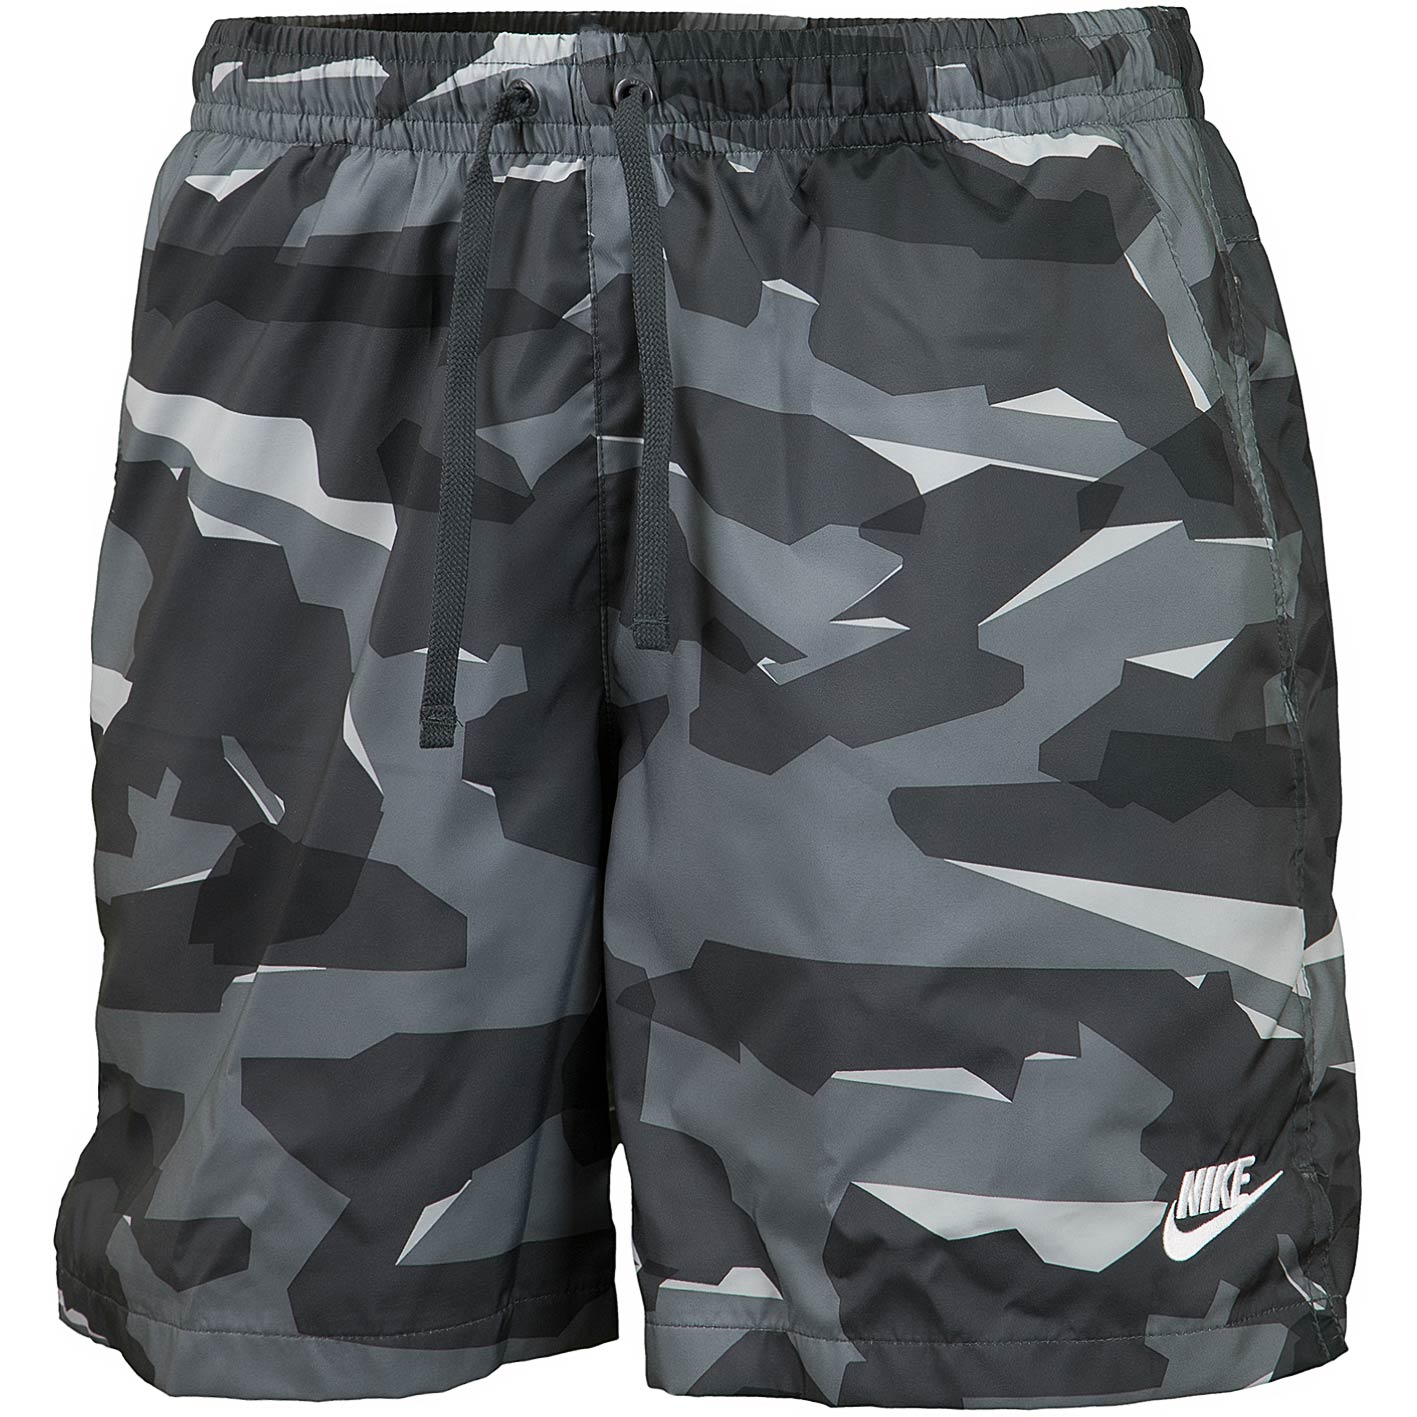 ☆ Nike Shorts CE Camo Woven grau/weiß - hier bestellen!